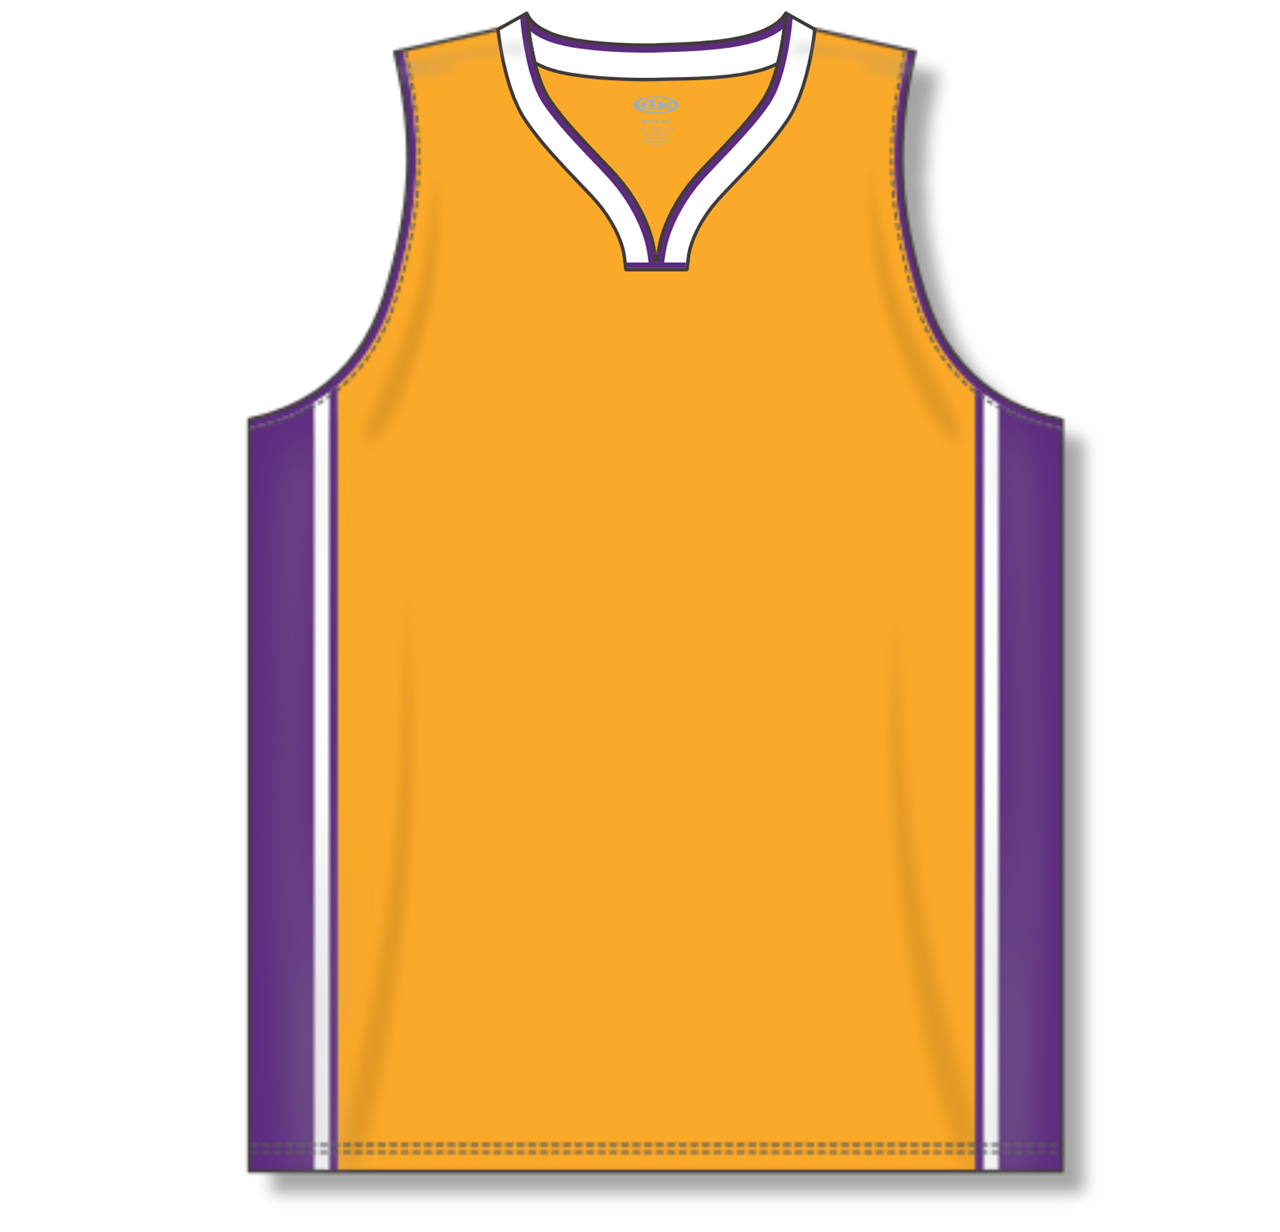 Athletic Knit (AK) B1325 Blank League Basketball Jersey